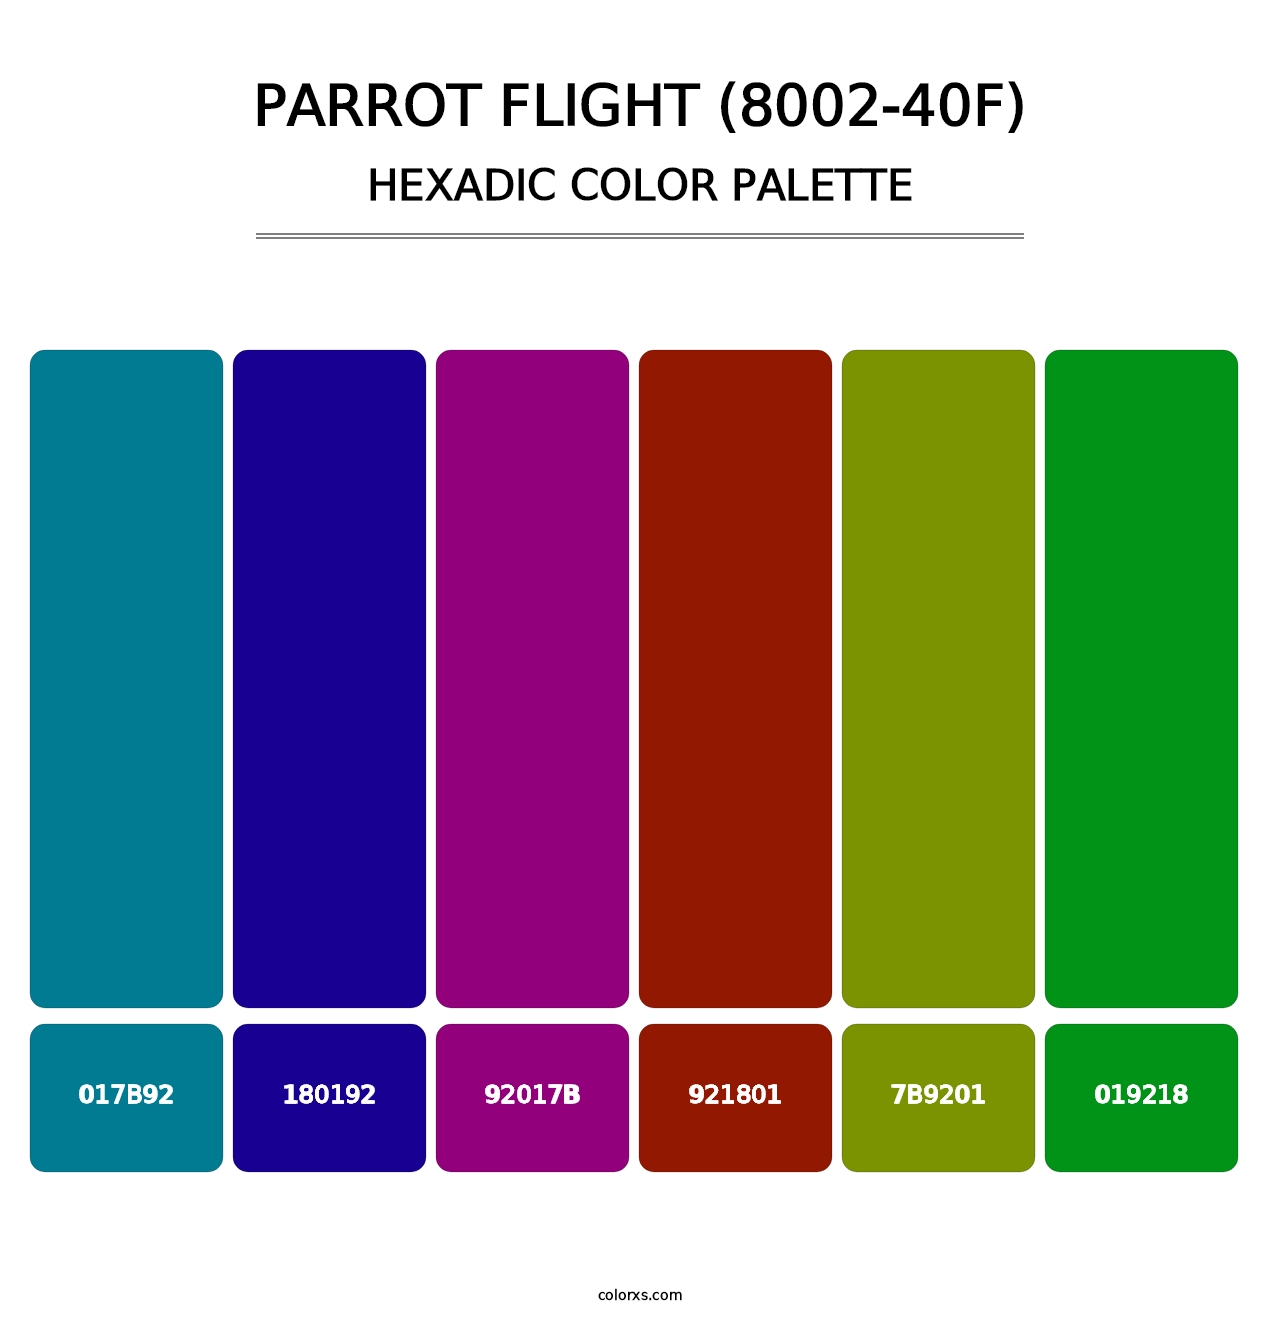 Parrot Flight (8002-40F) - Hexadic Color Palette